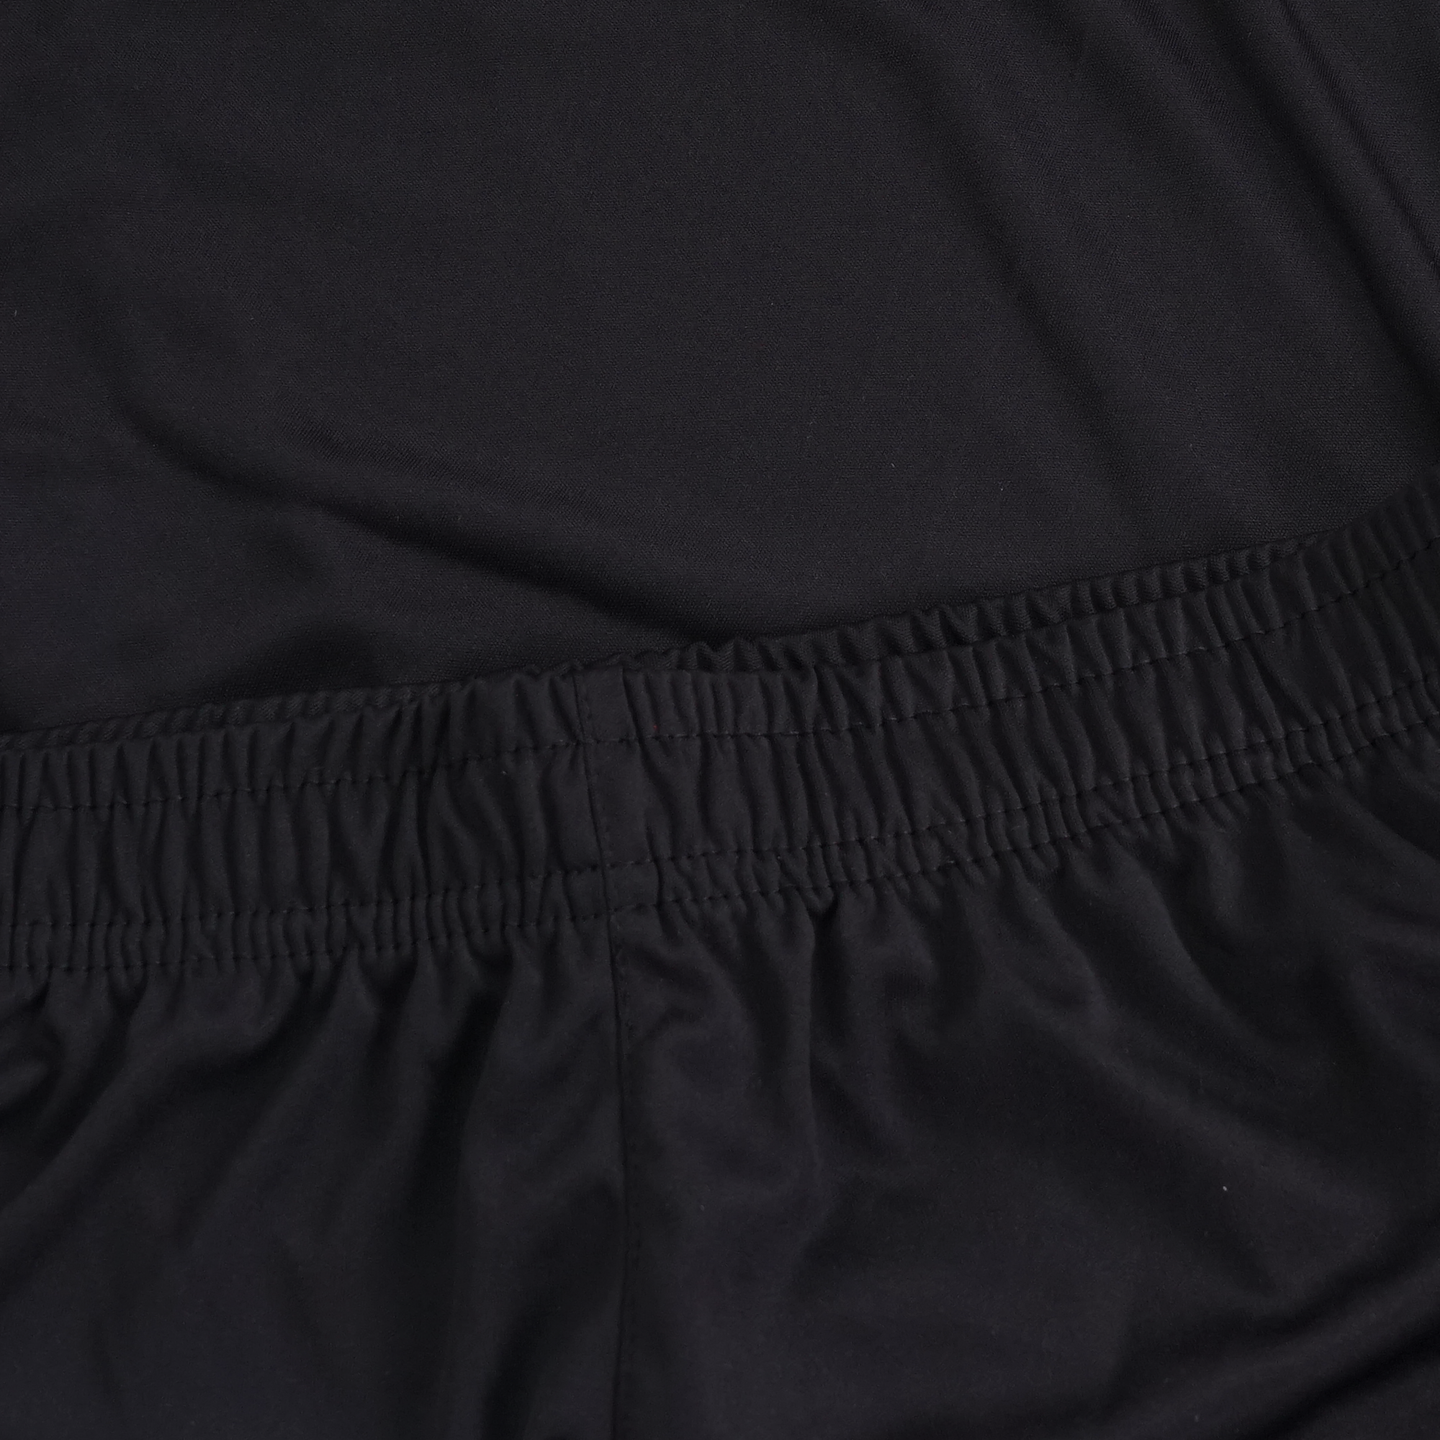 Essential Football Shorts - Black